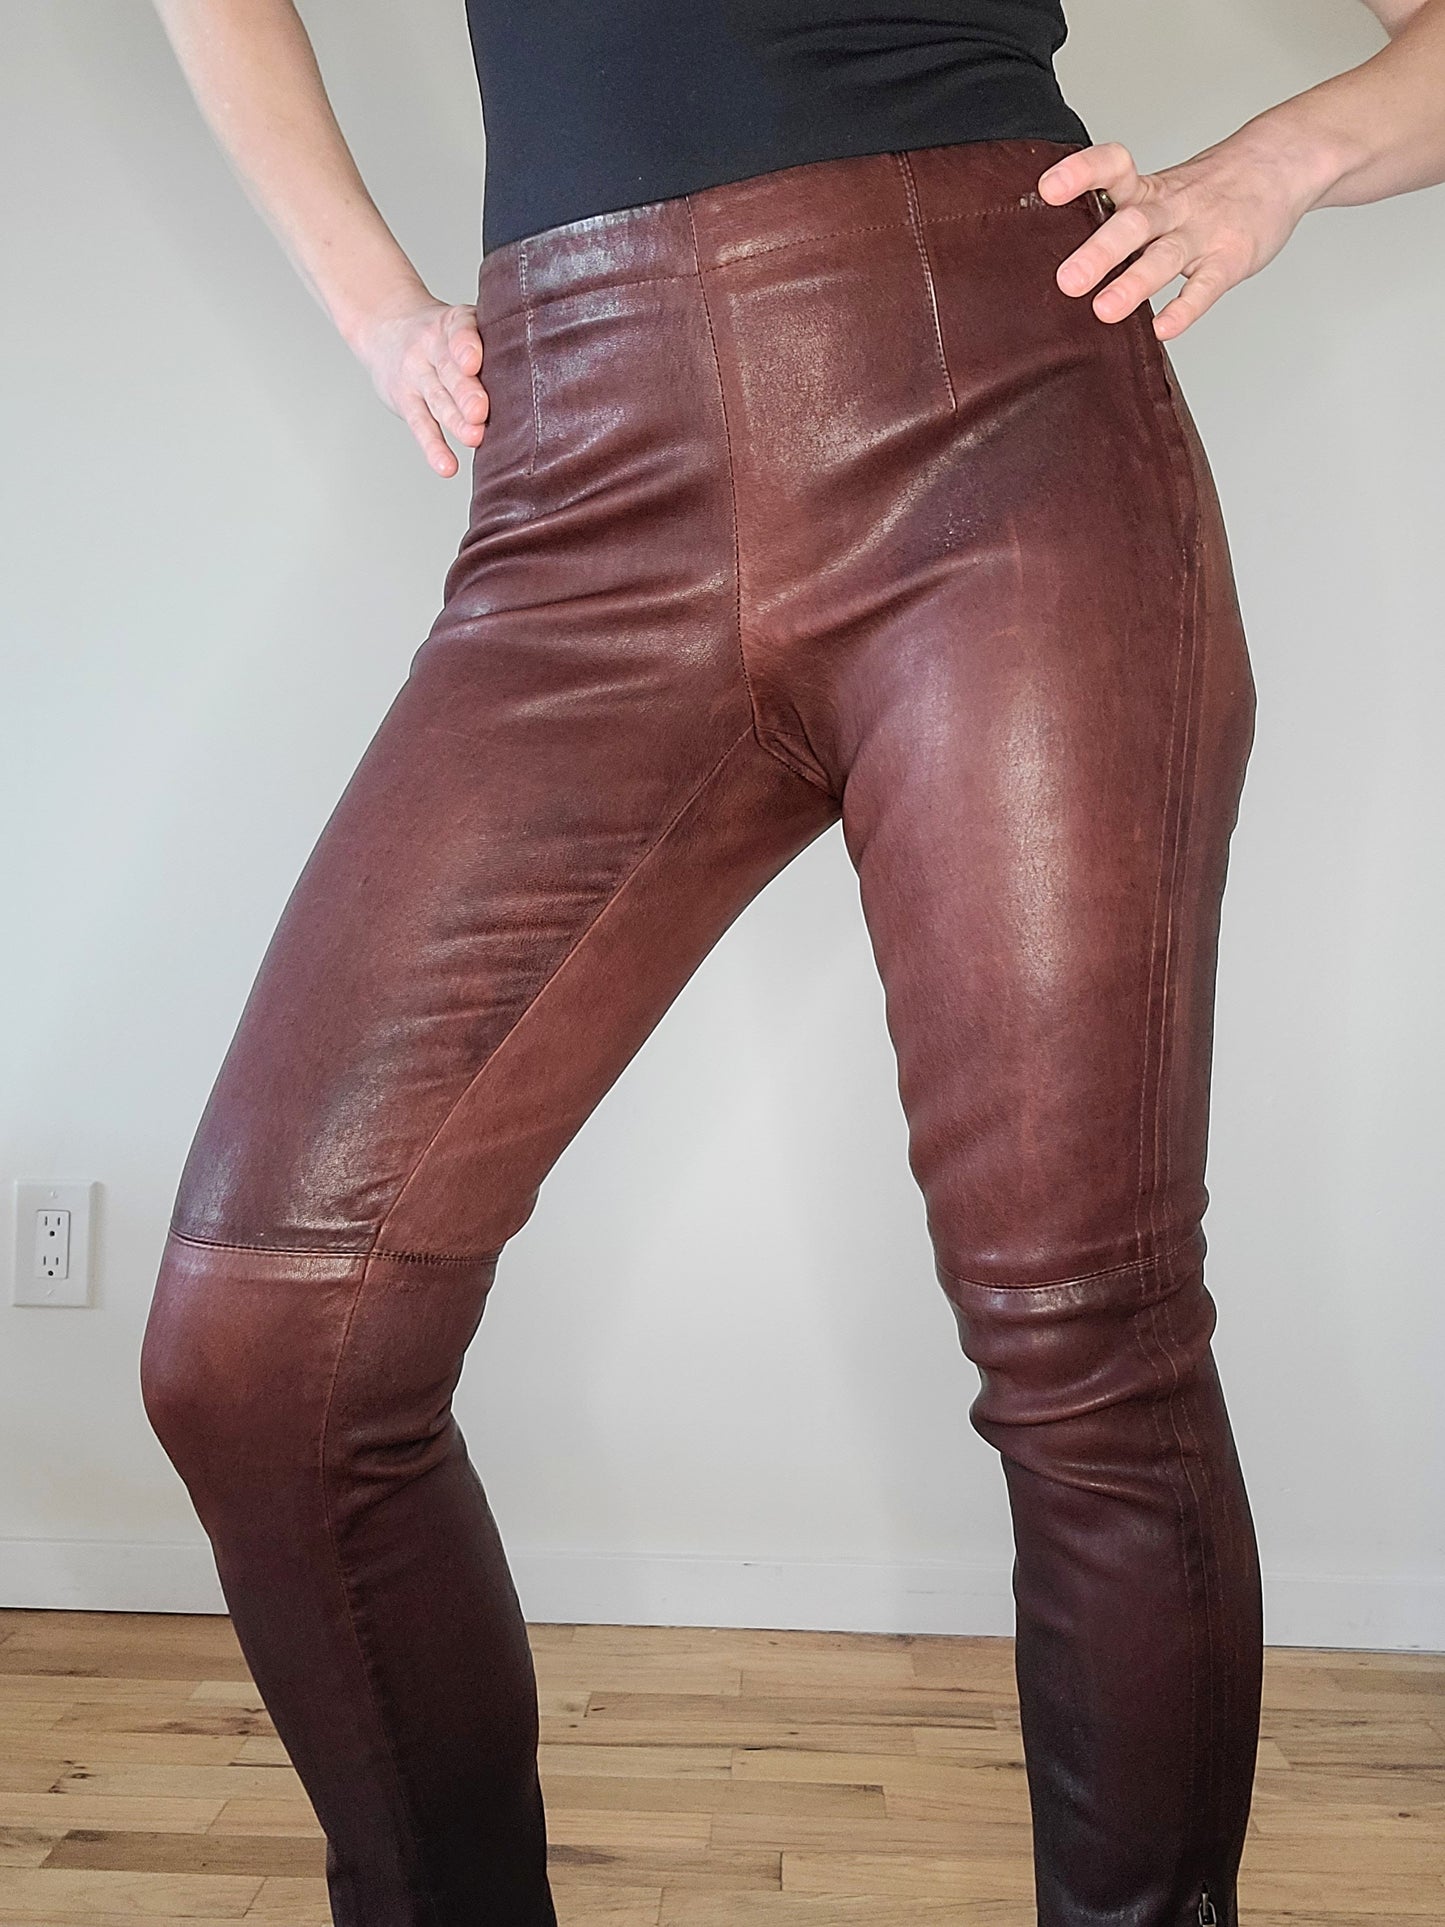 Kaufman Franco Mahogany Leather Pants 8